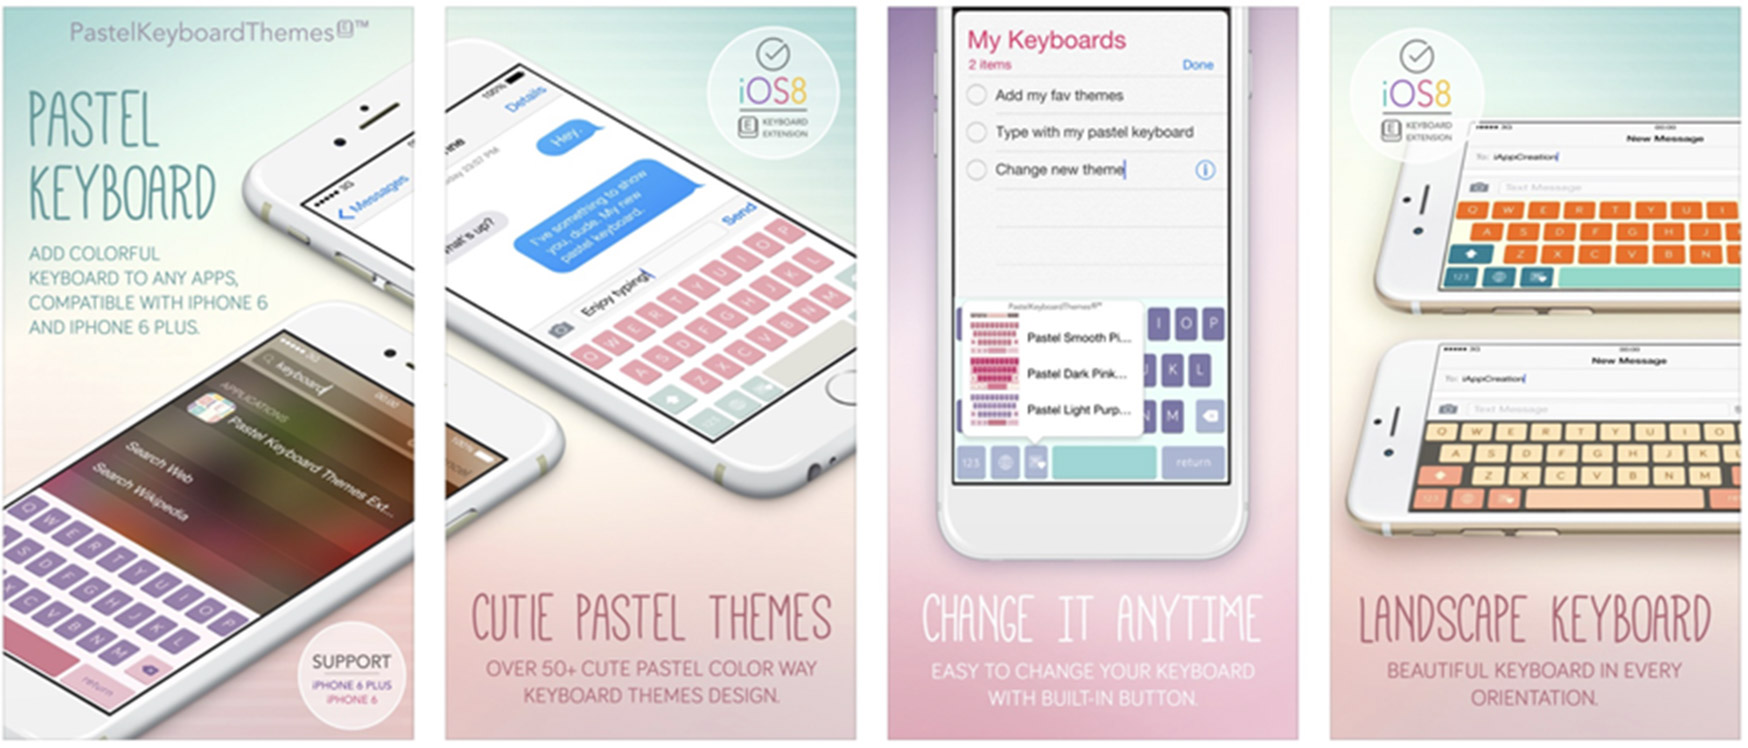 Pastel Keyboard - Startup Thailand focus